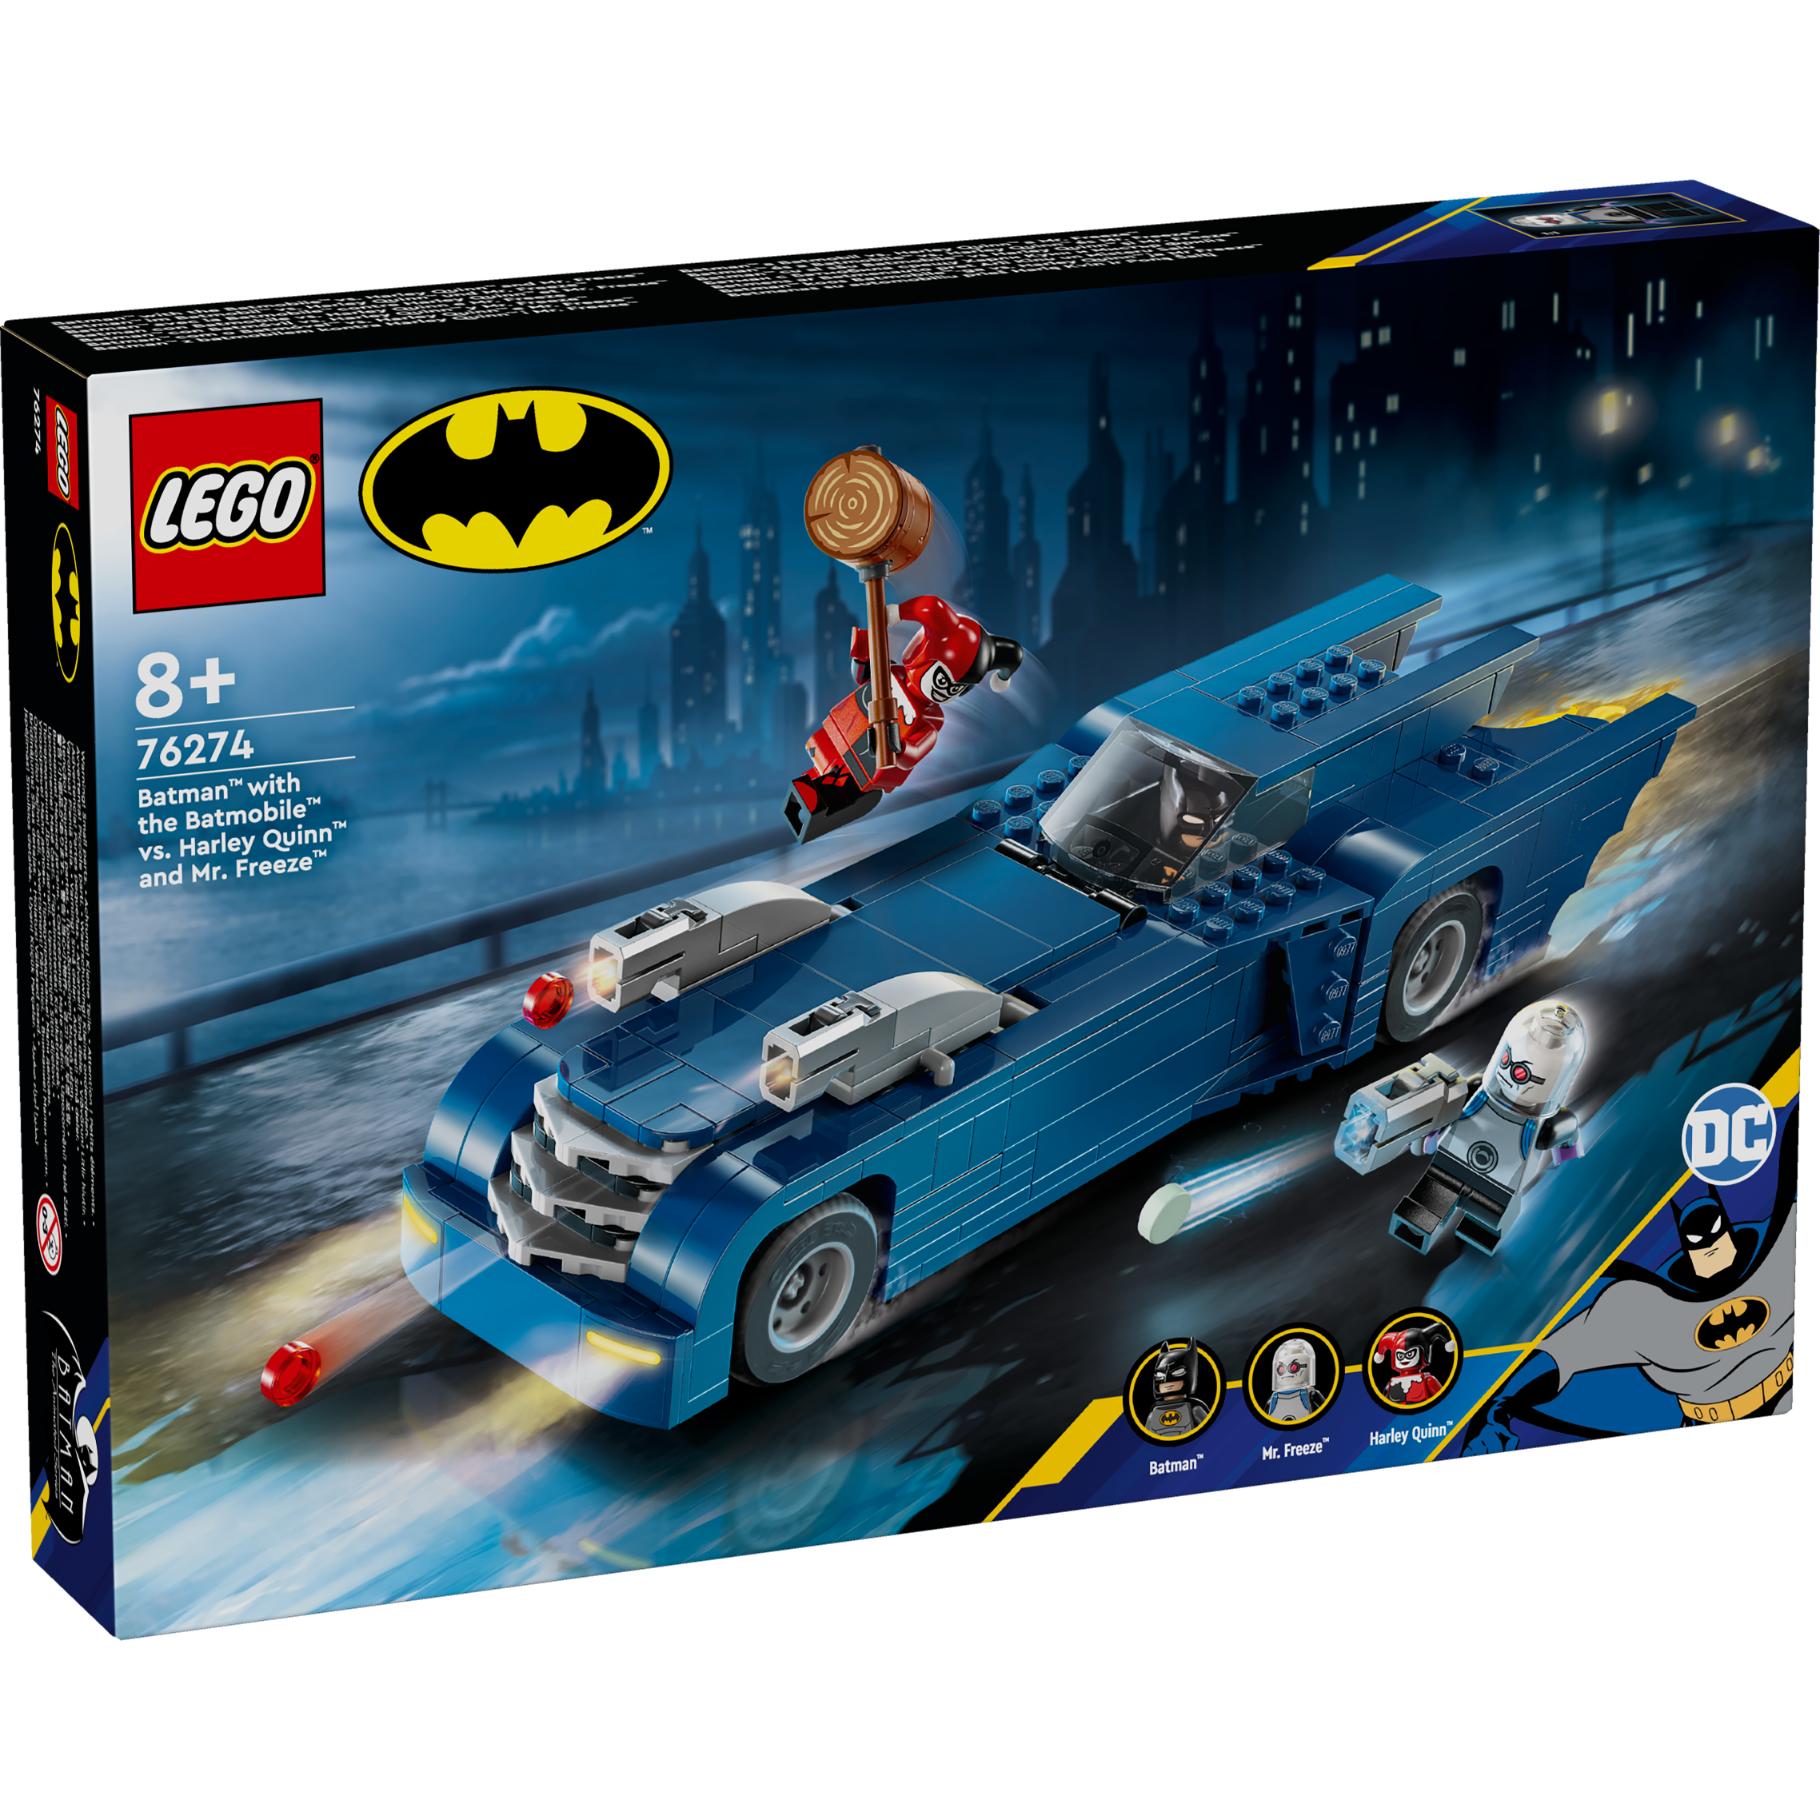 Top1Toys LEGO 76274 Super Heroes DC Batman met de Batmobile vs. Harley Quinn™ en Mr. Free